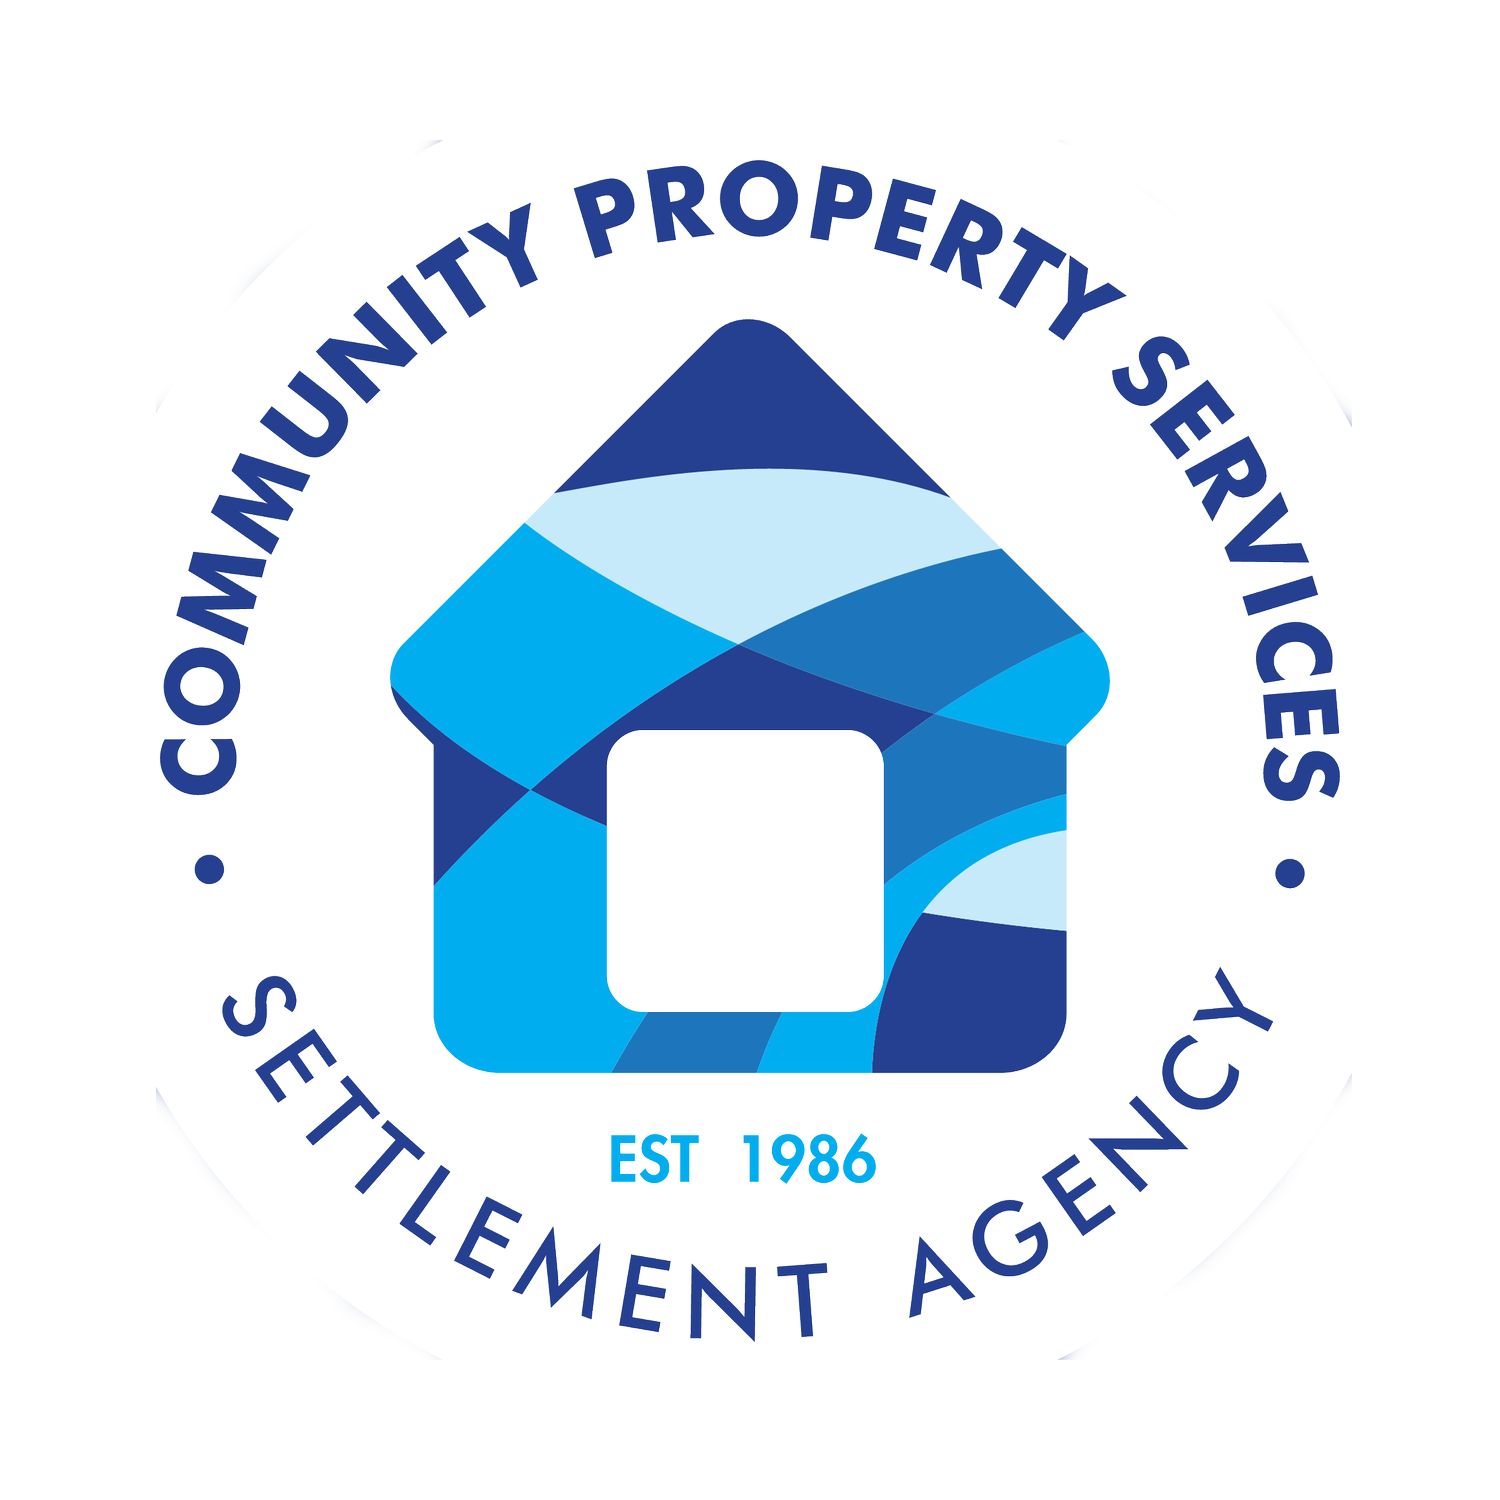 Community Property Services